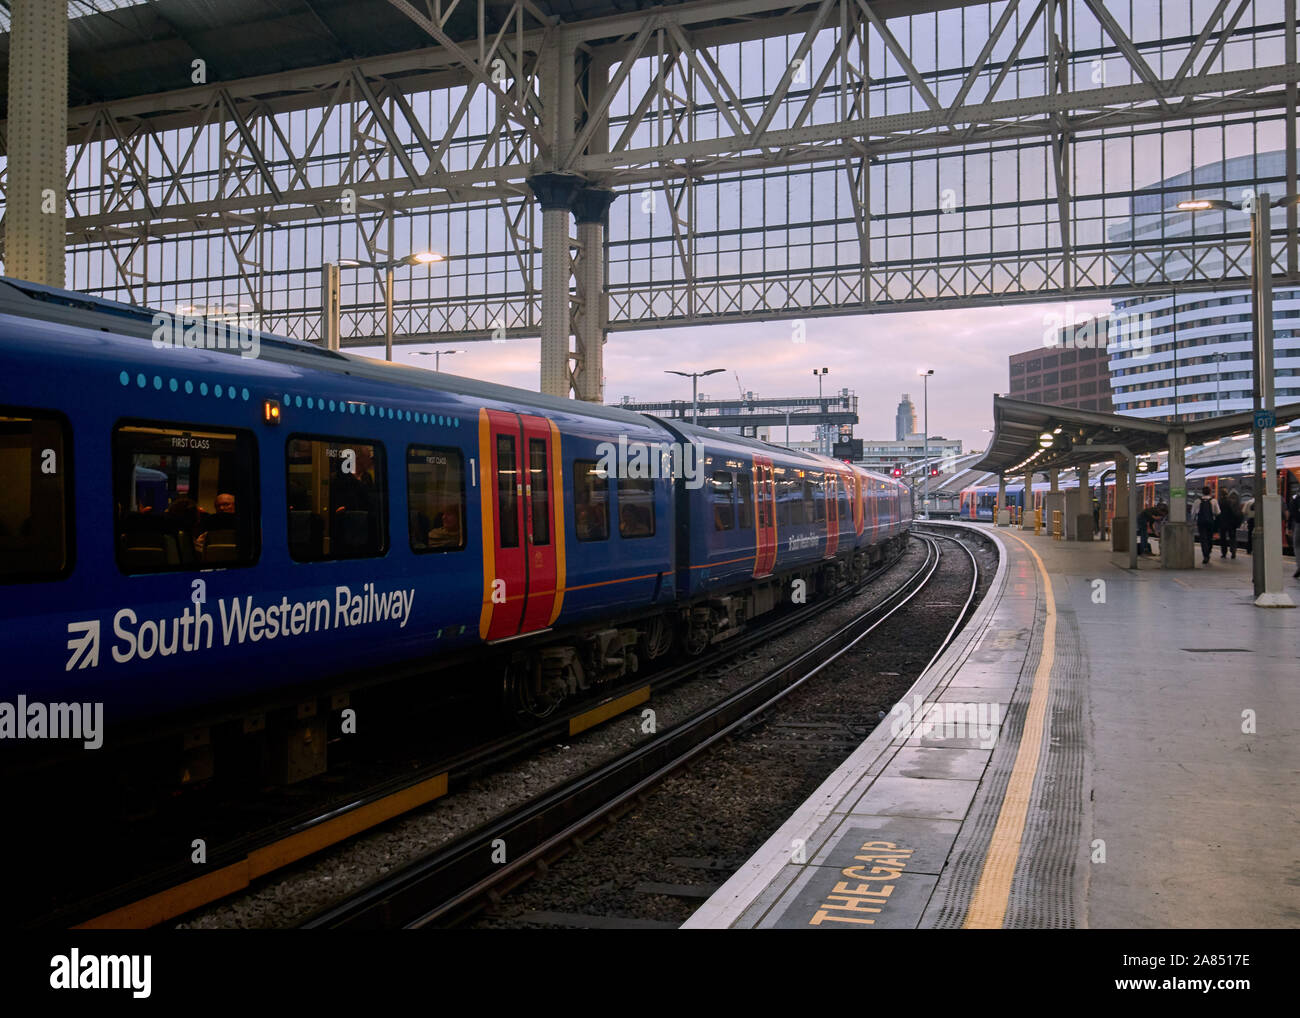 A South Western Railway train waiting at the platform at Waterloo station. Stock Photo